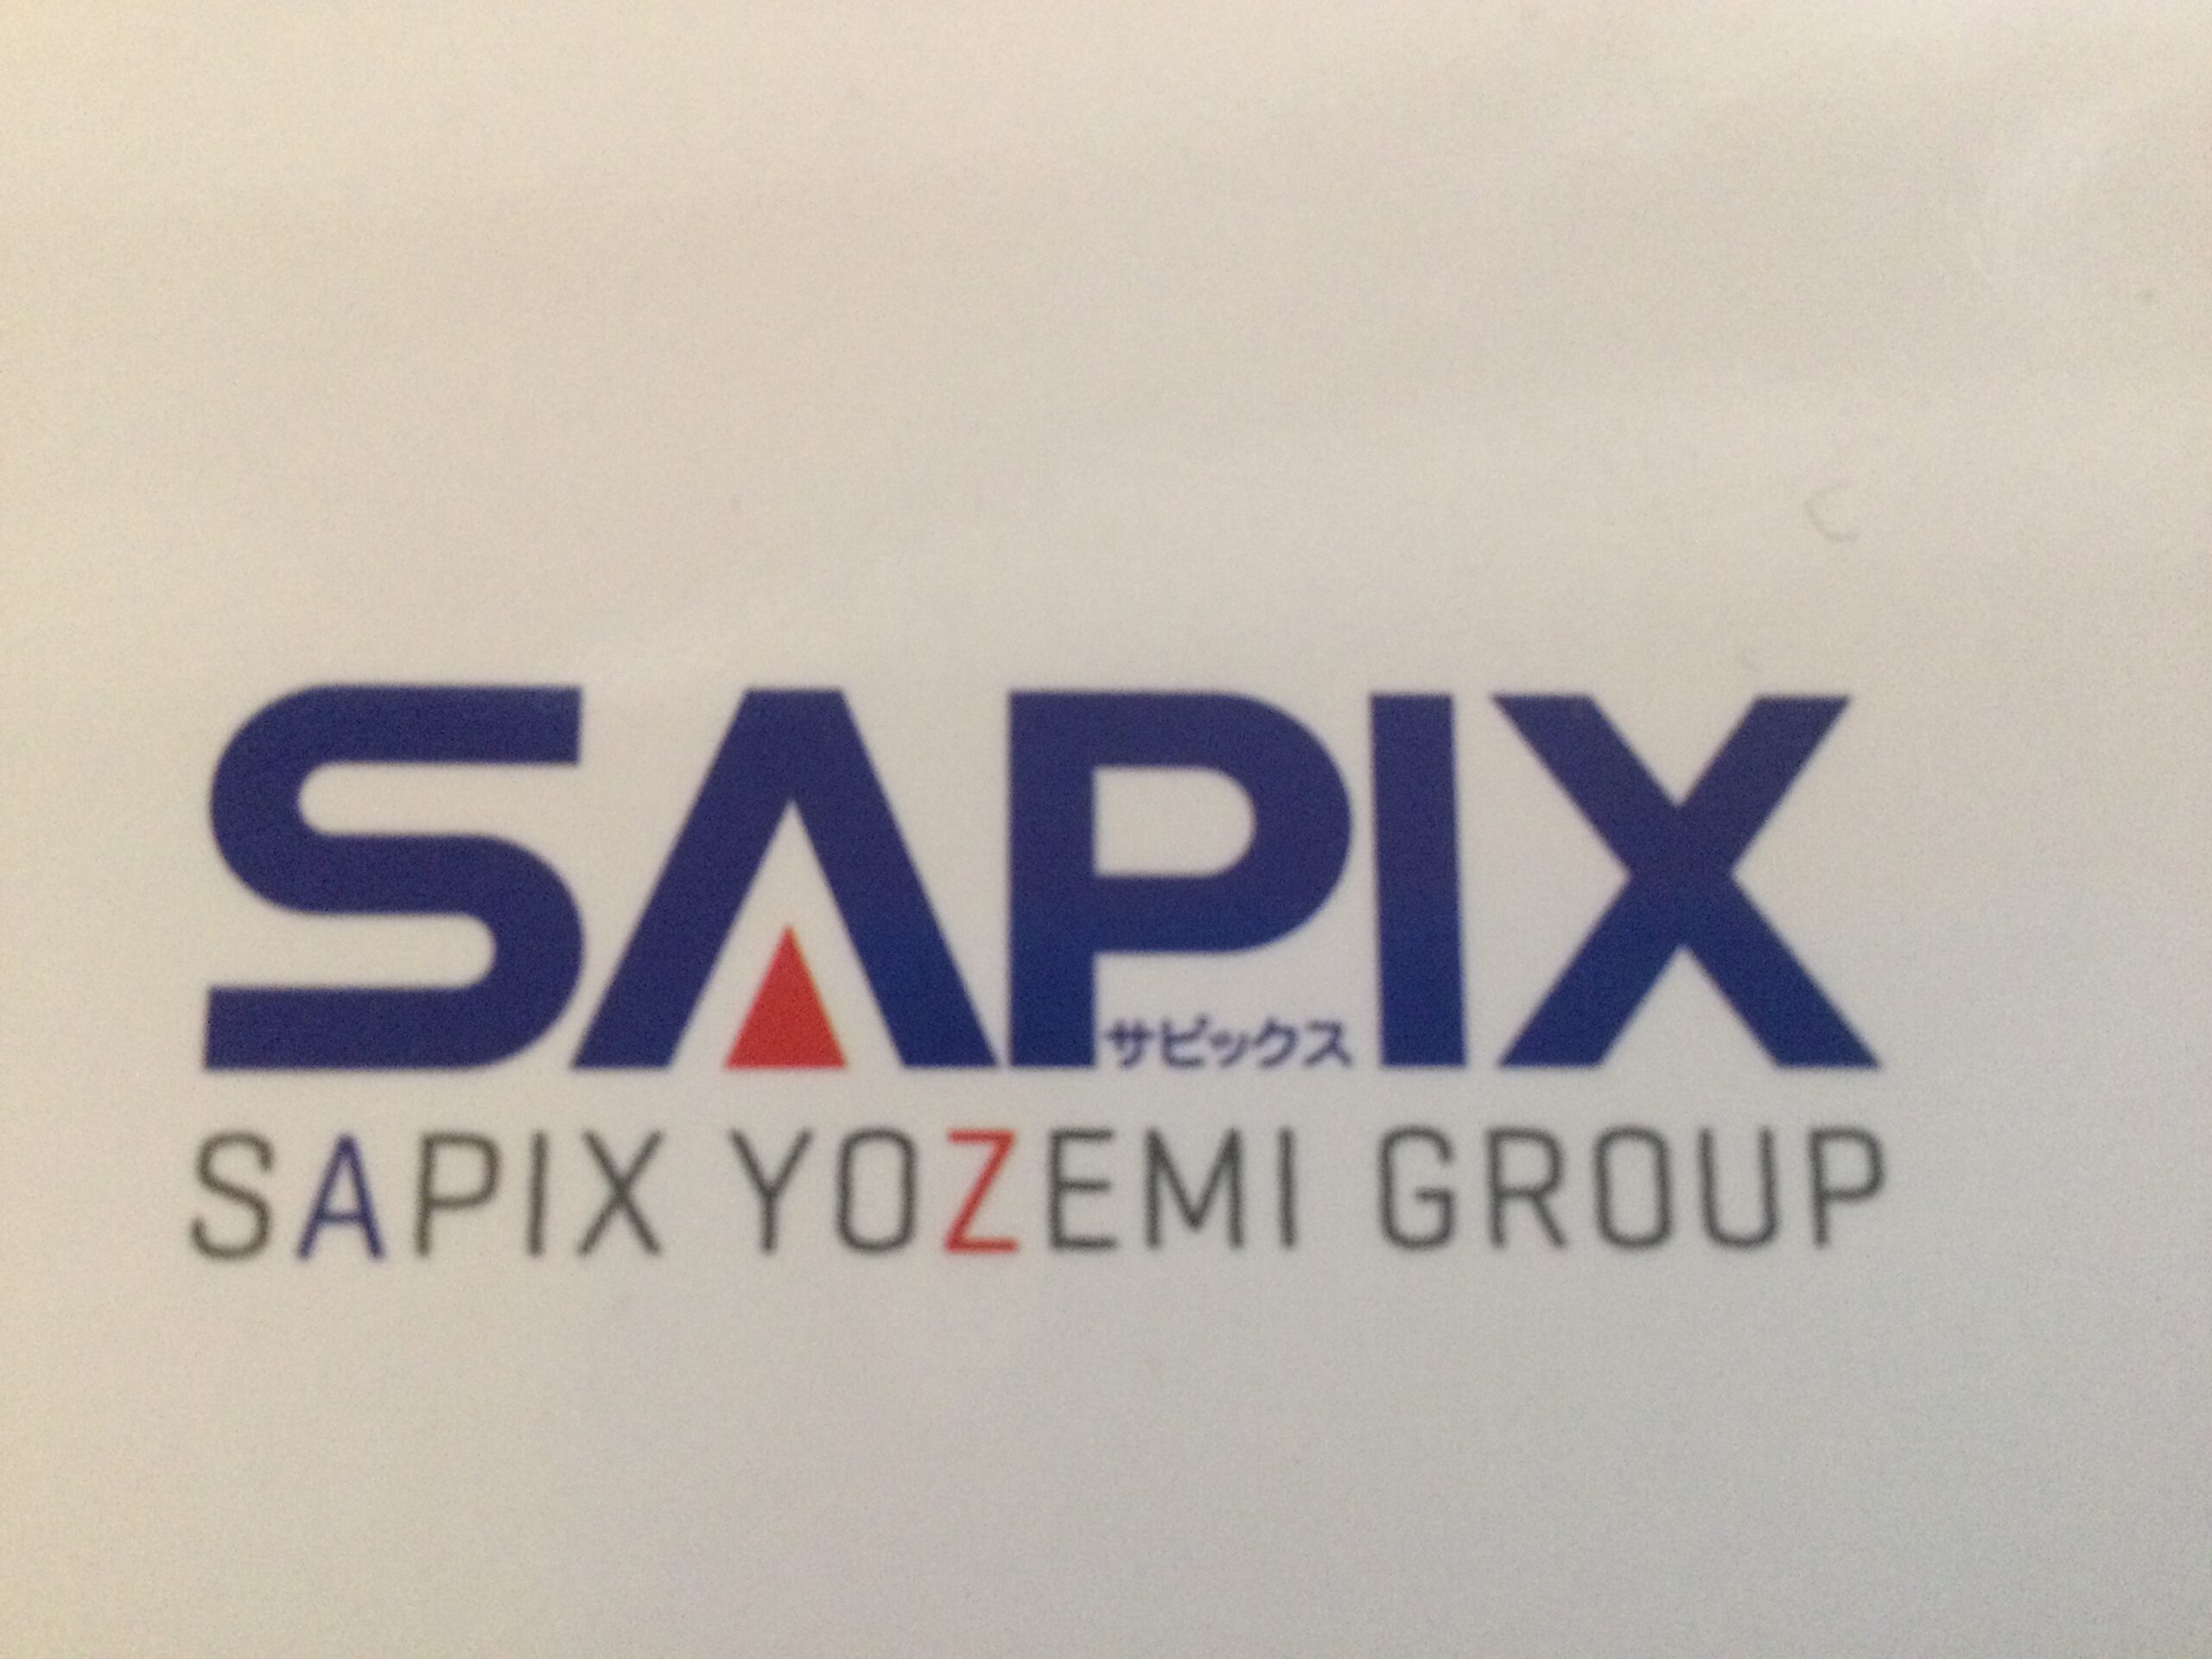 Sapix logo